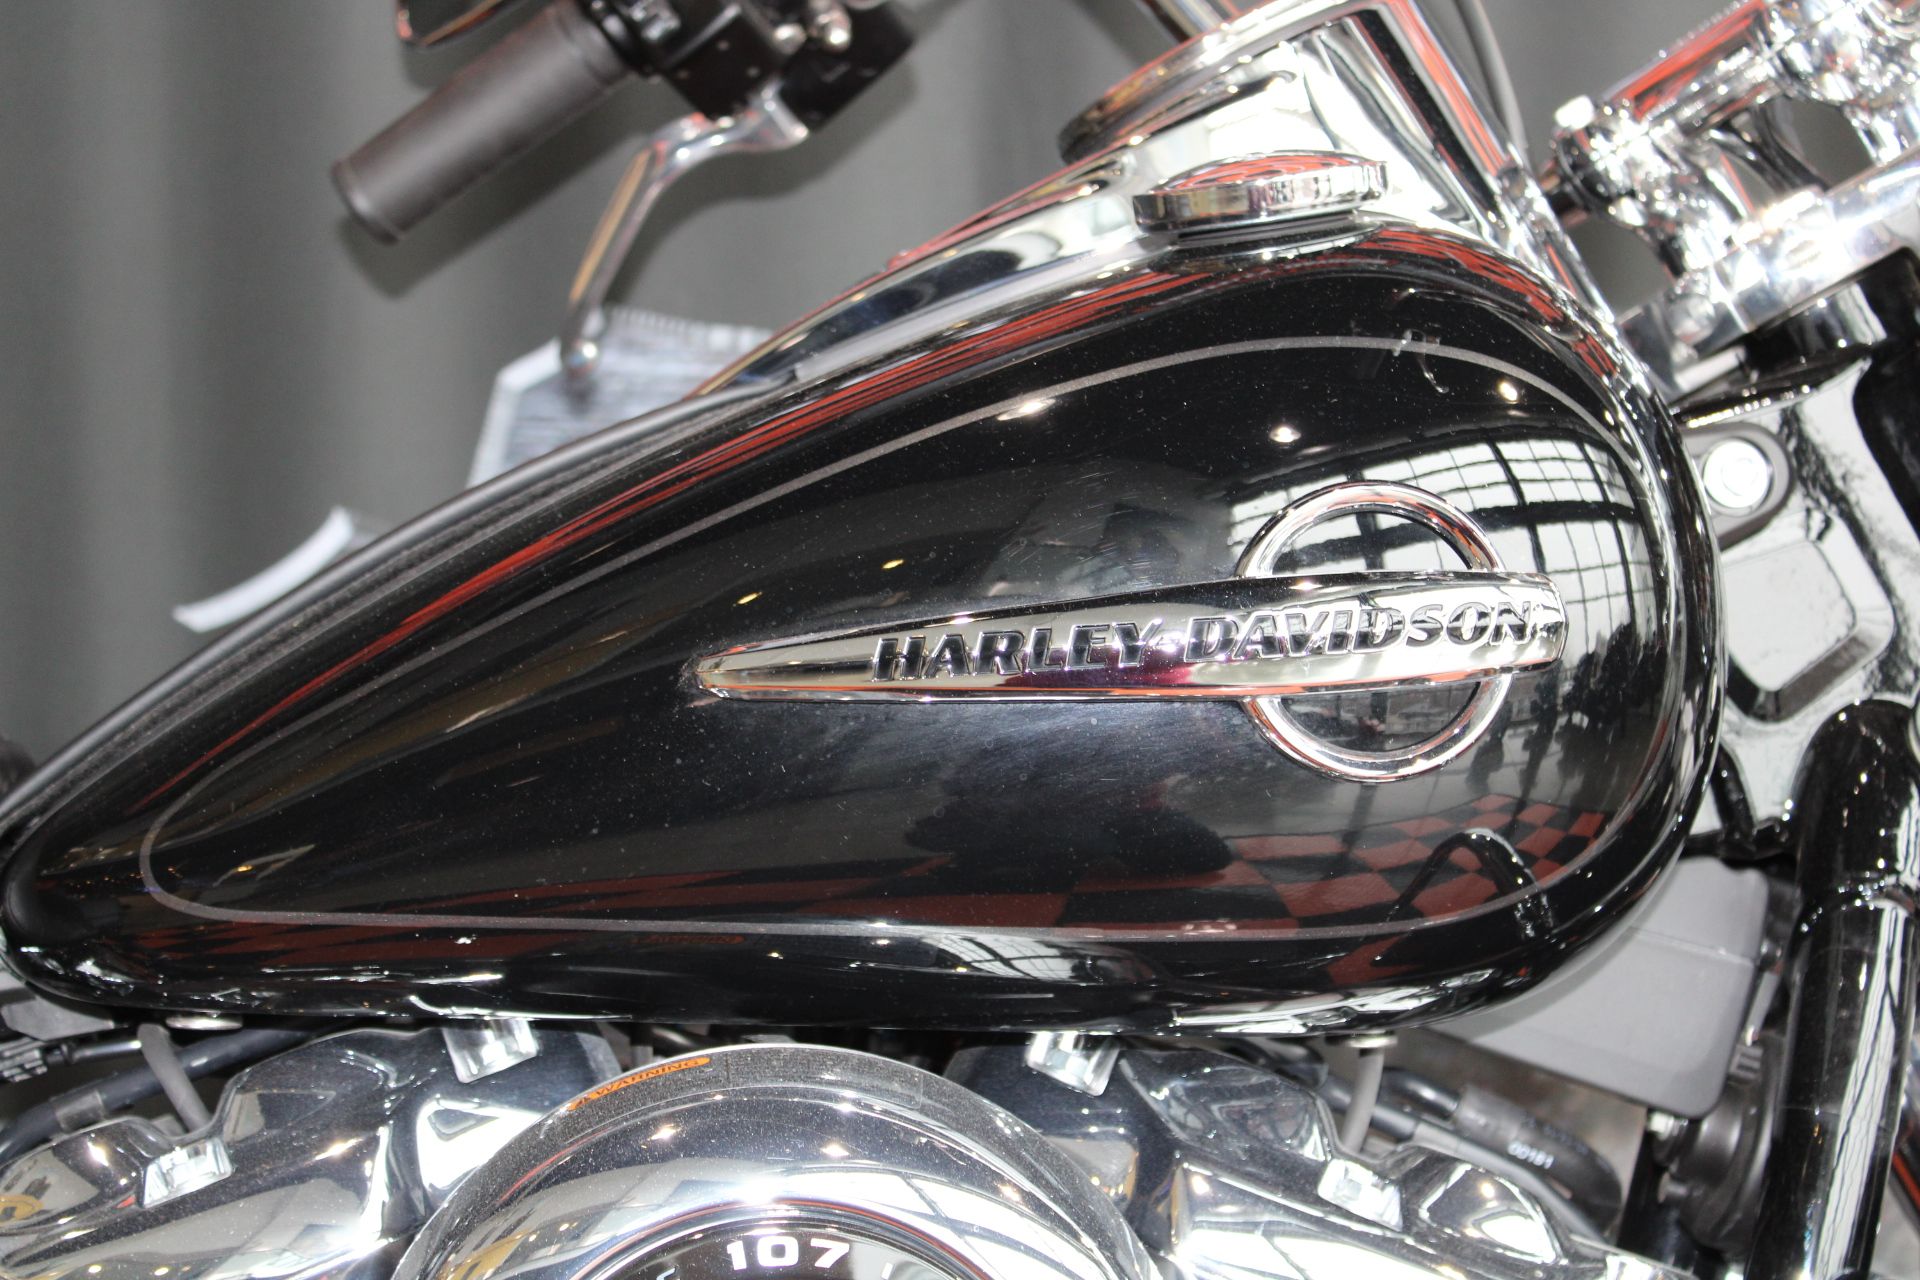 2020 Harley-Davidson Heritage Classic in Shorewood, Illinois - Photo 5